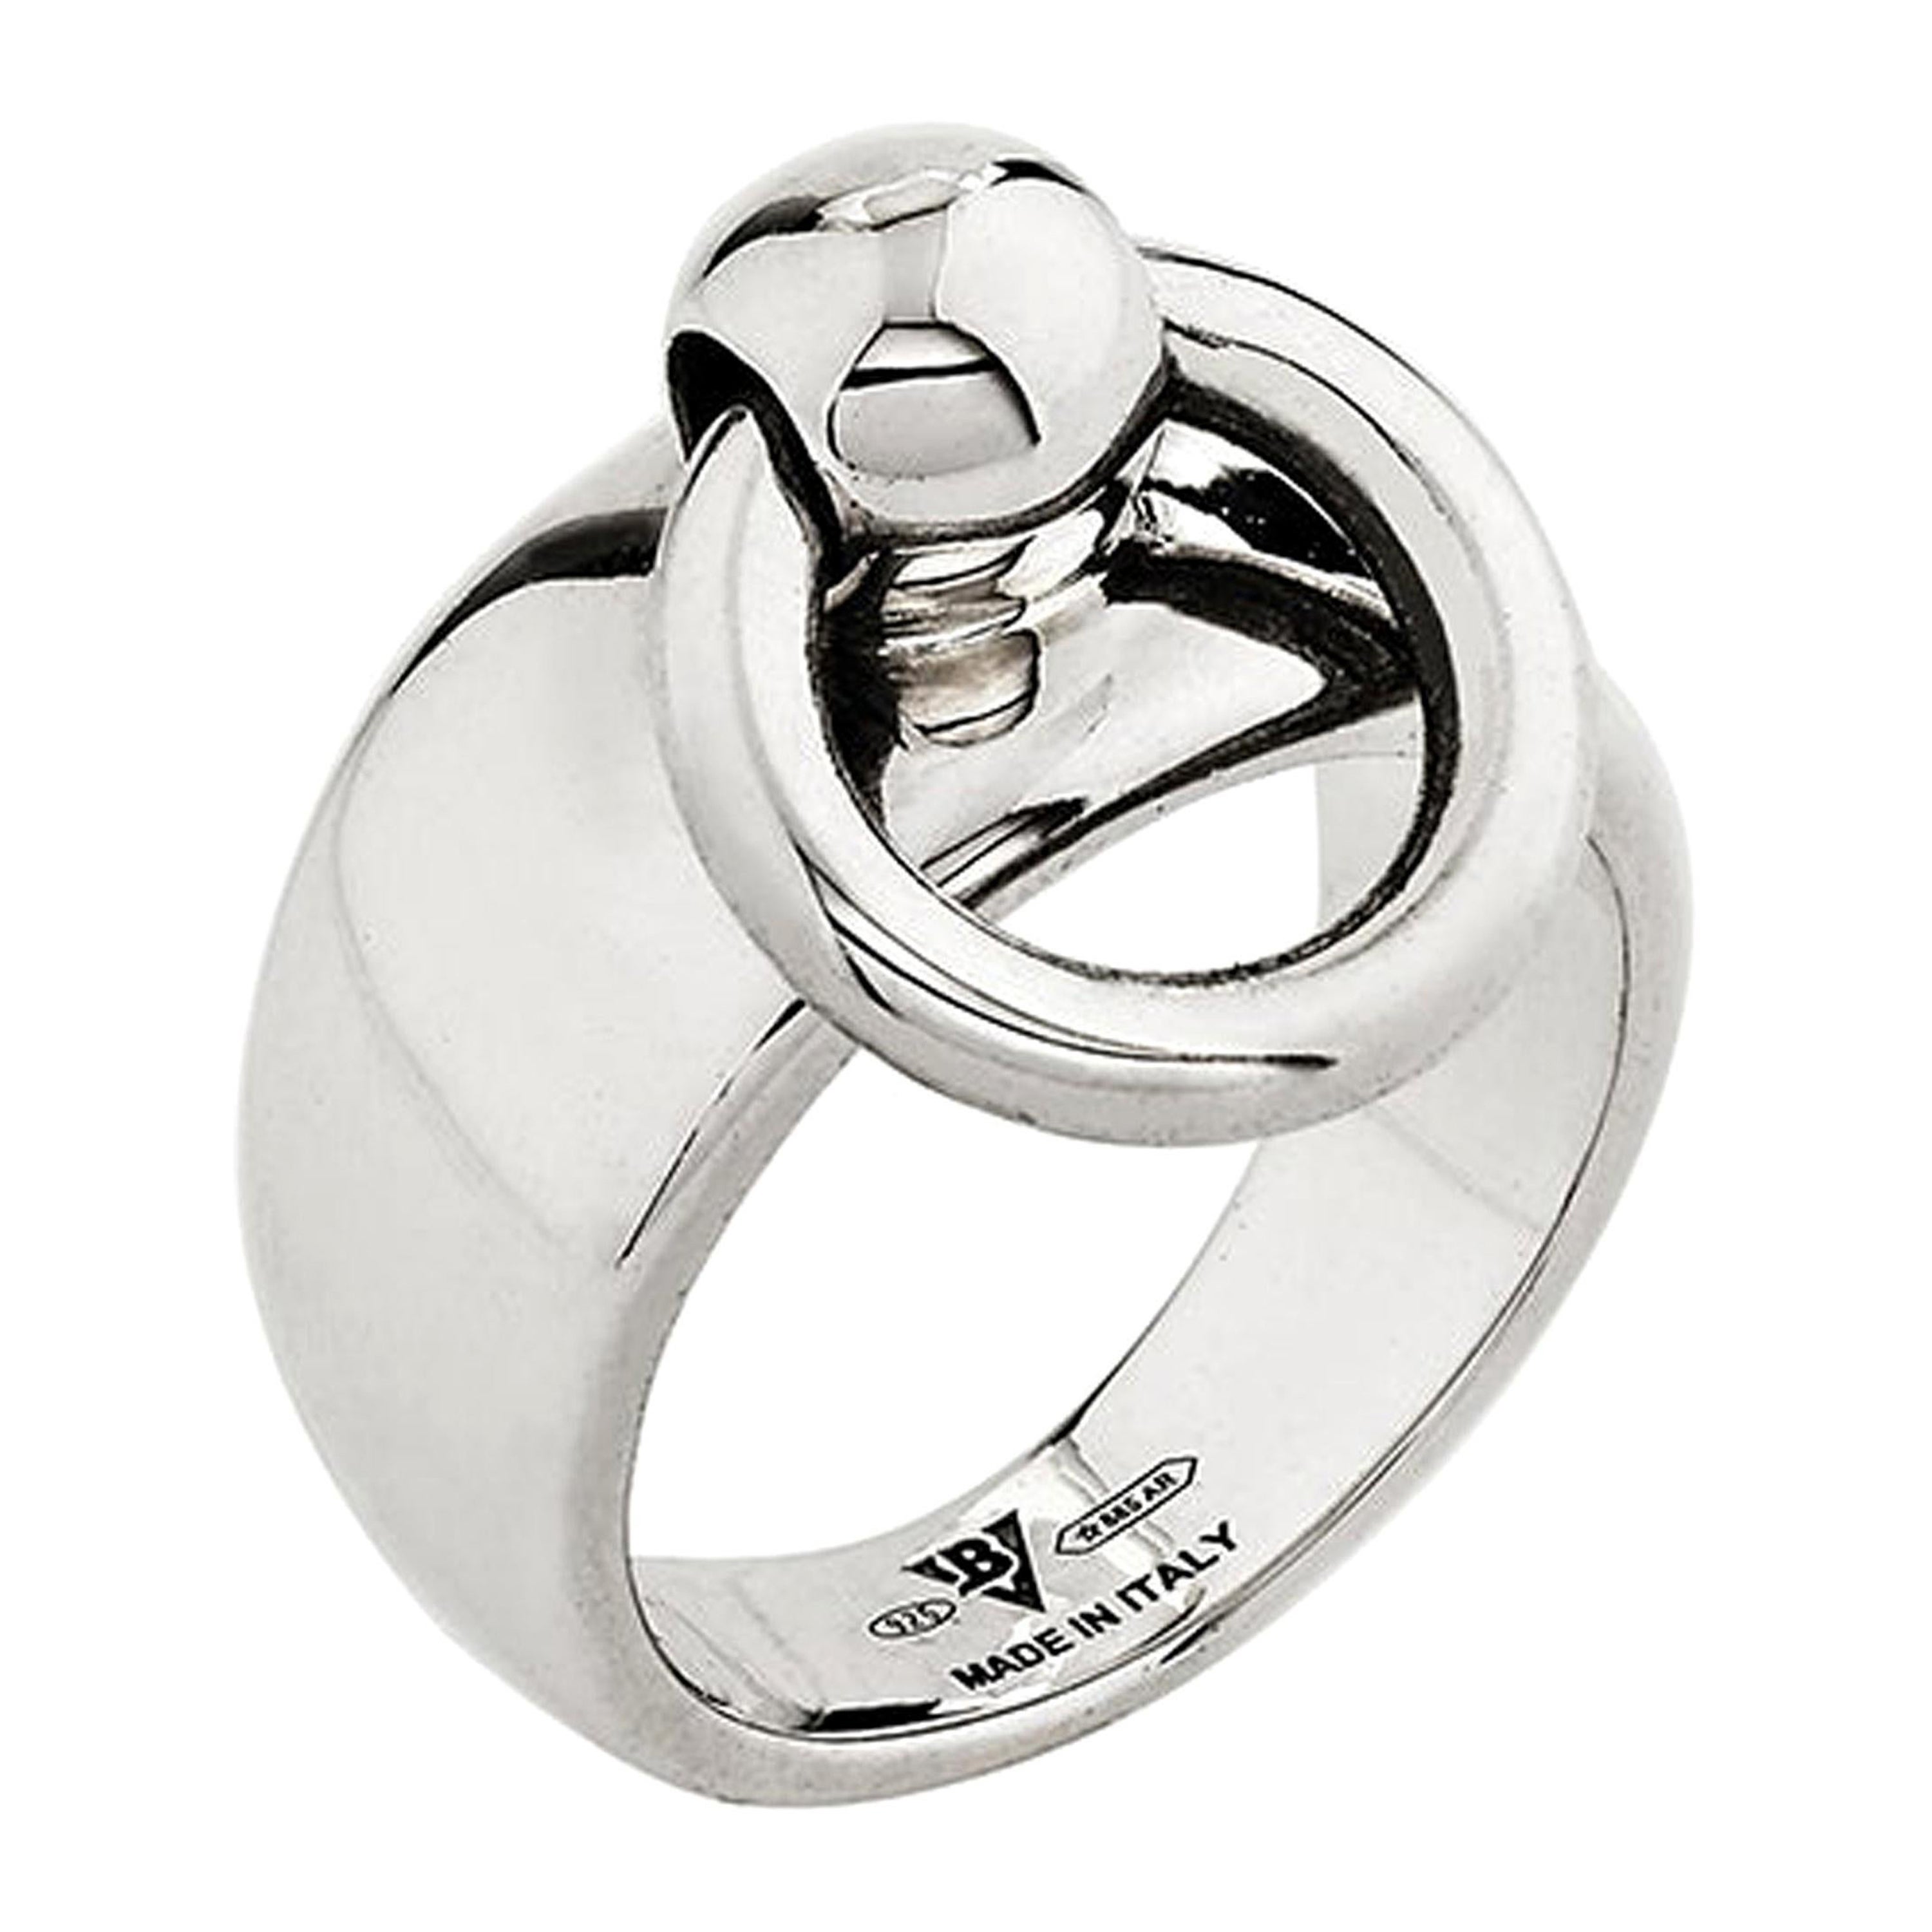 Betony Vernon "O'ring Band Medium Ring" Ring Sterling Silver 925 For Sale